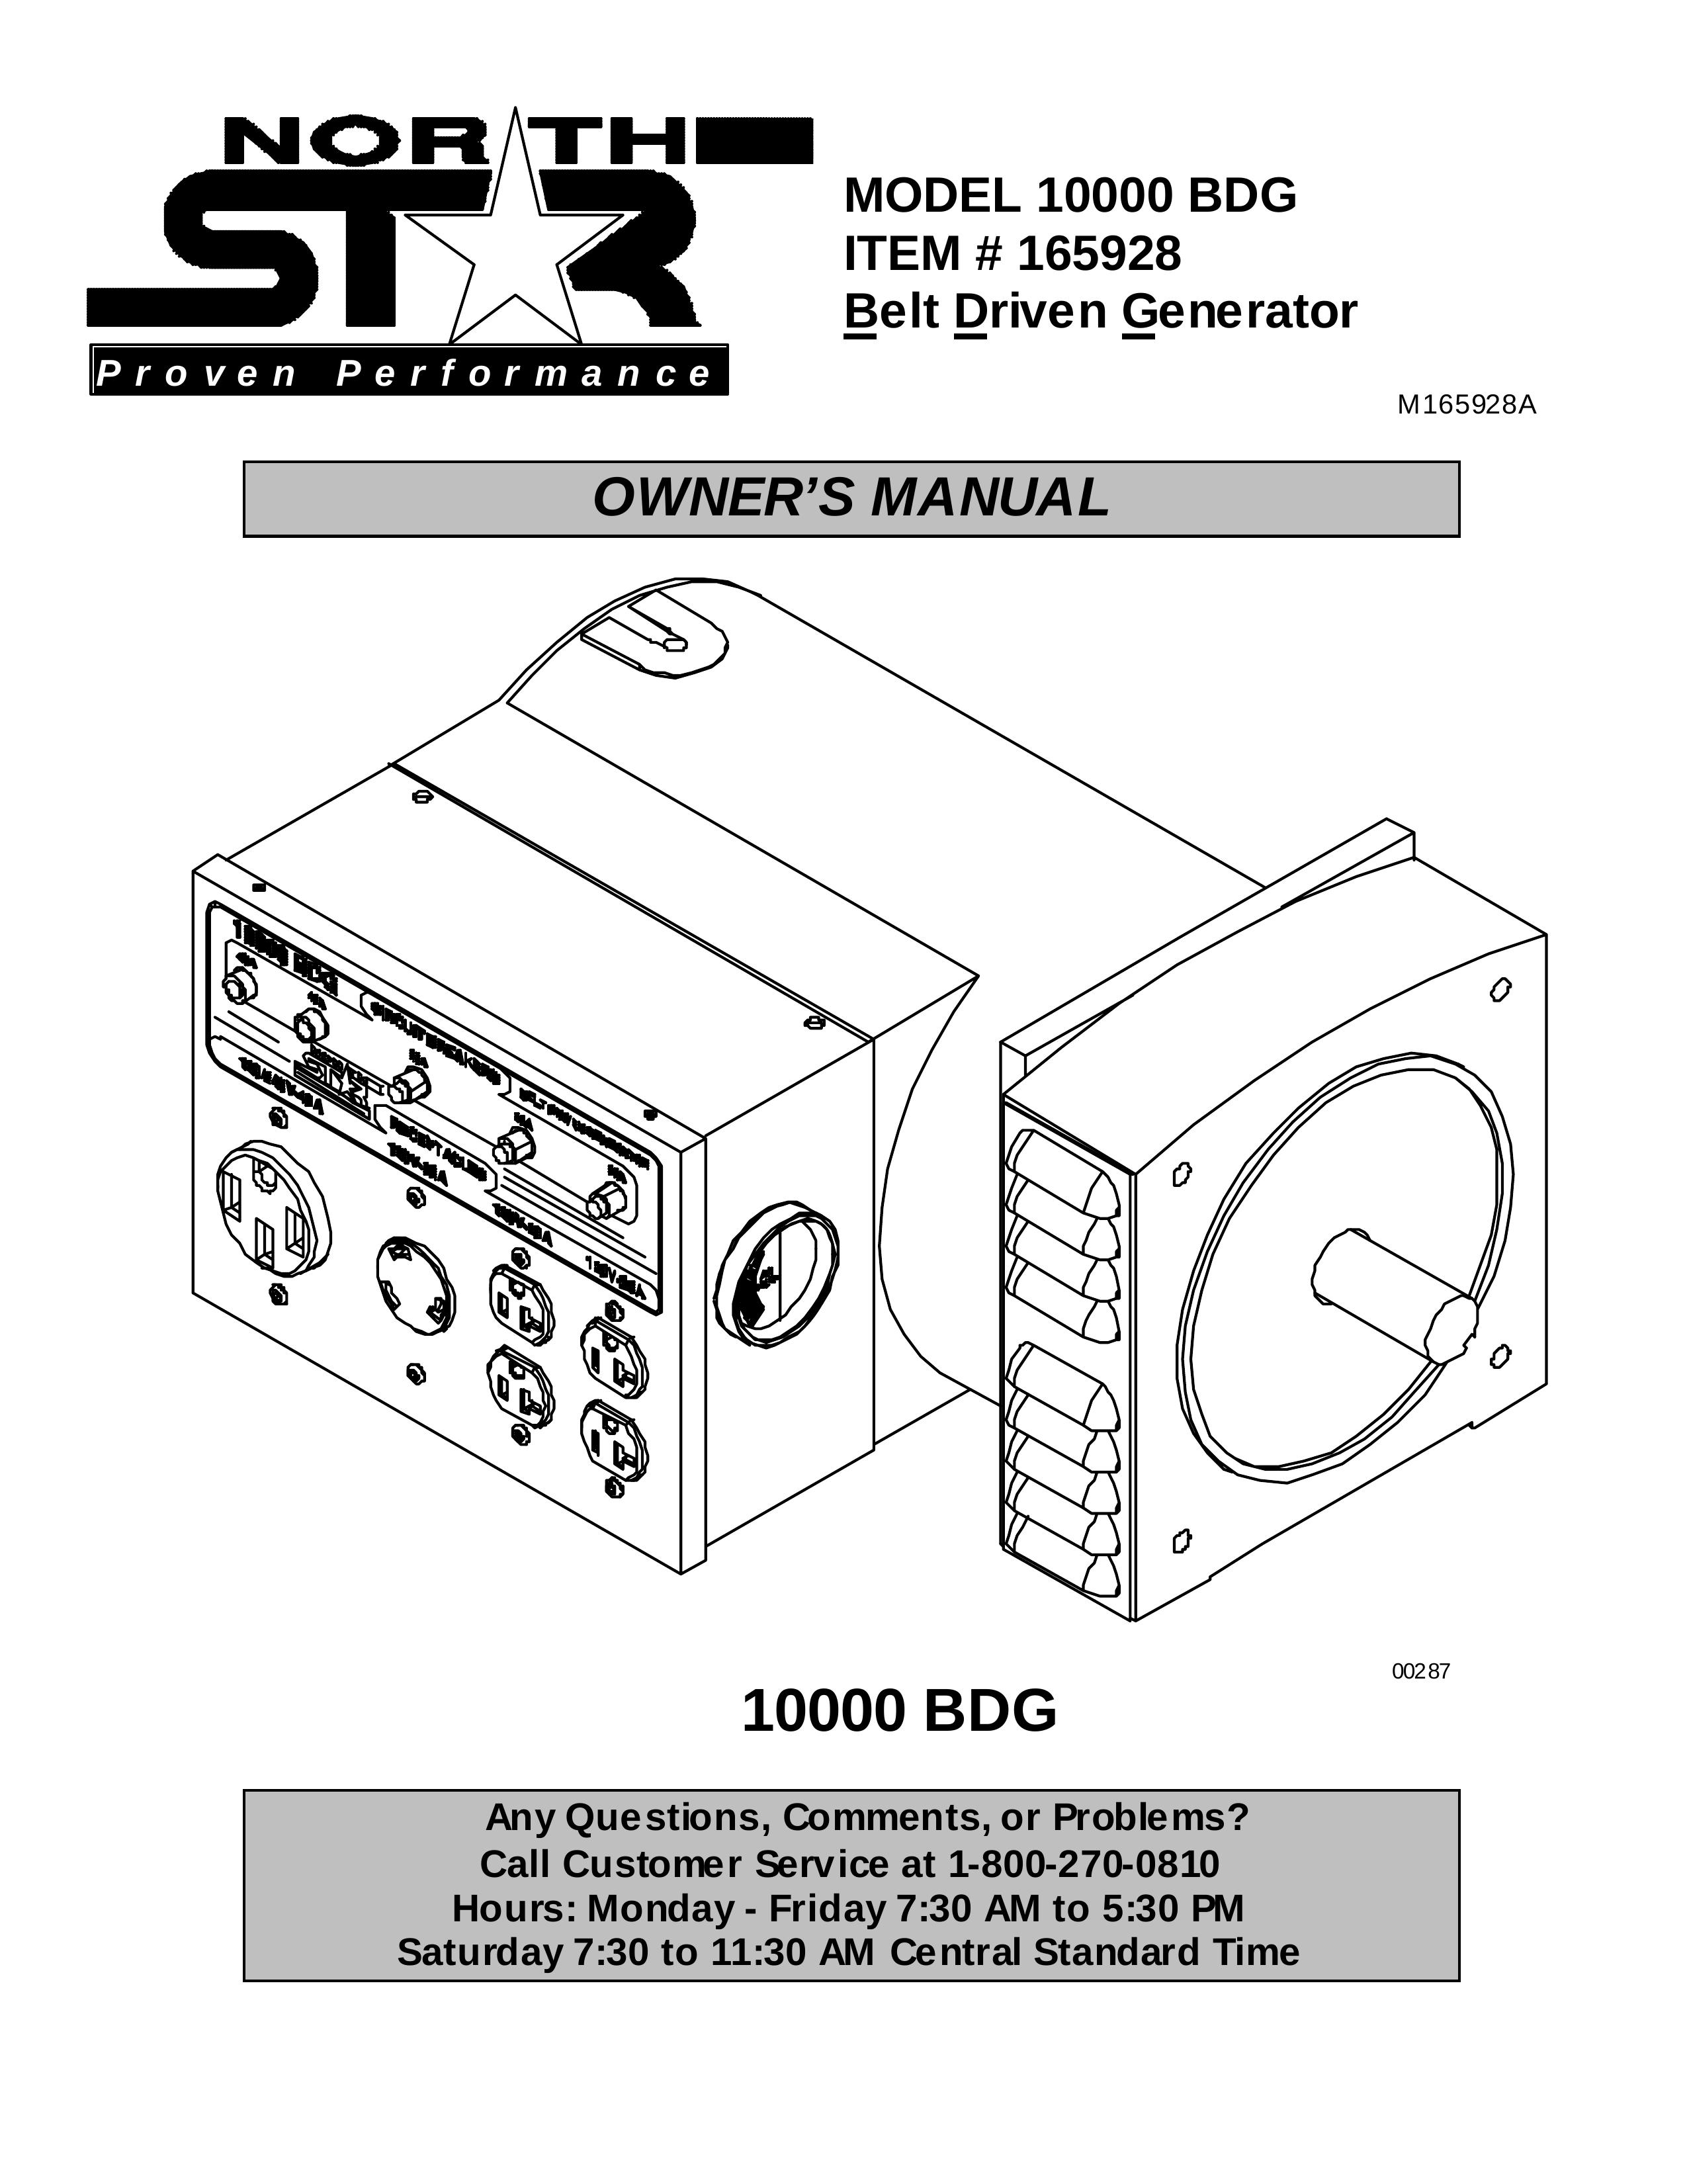 Northern Industrial Tools 10000 BDG Portable Generator User Manual